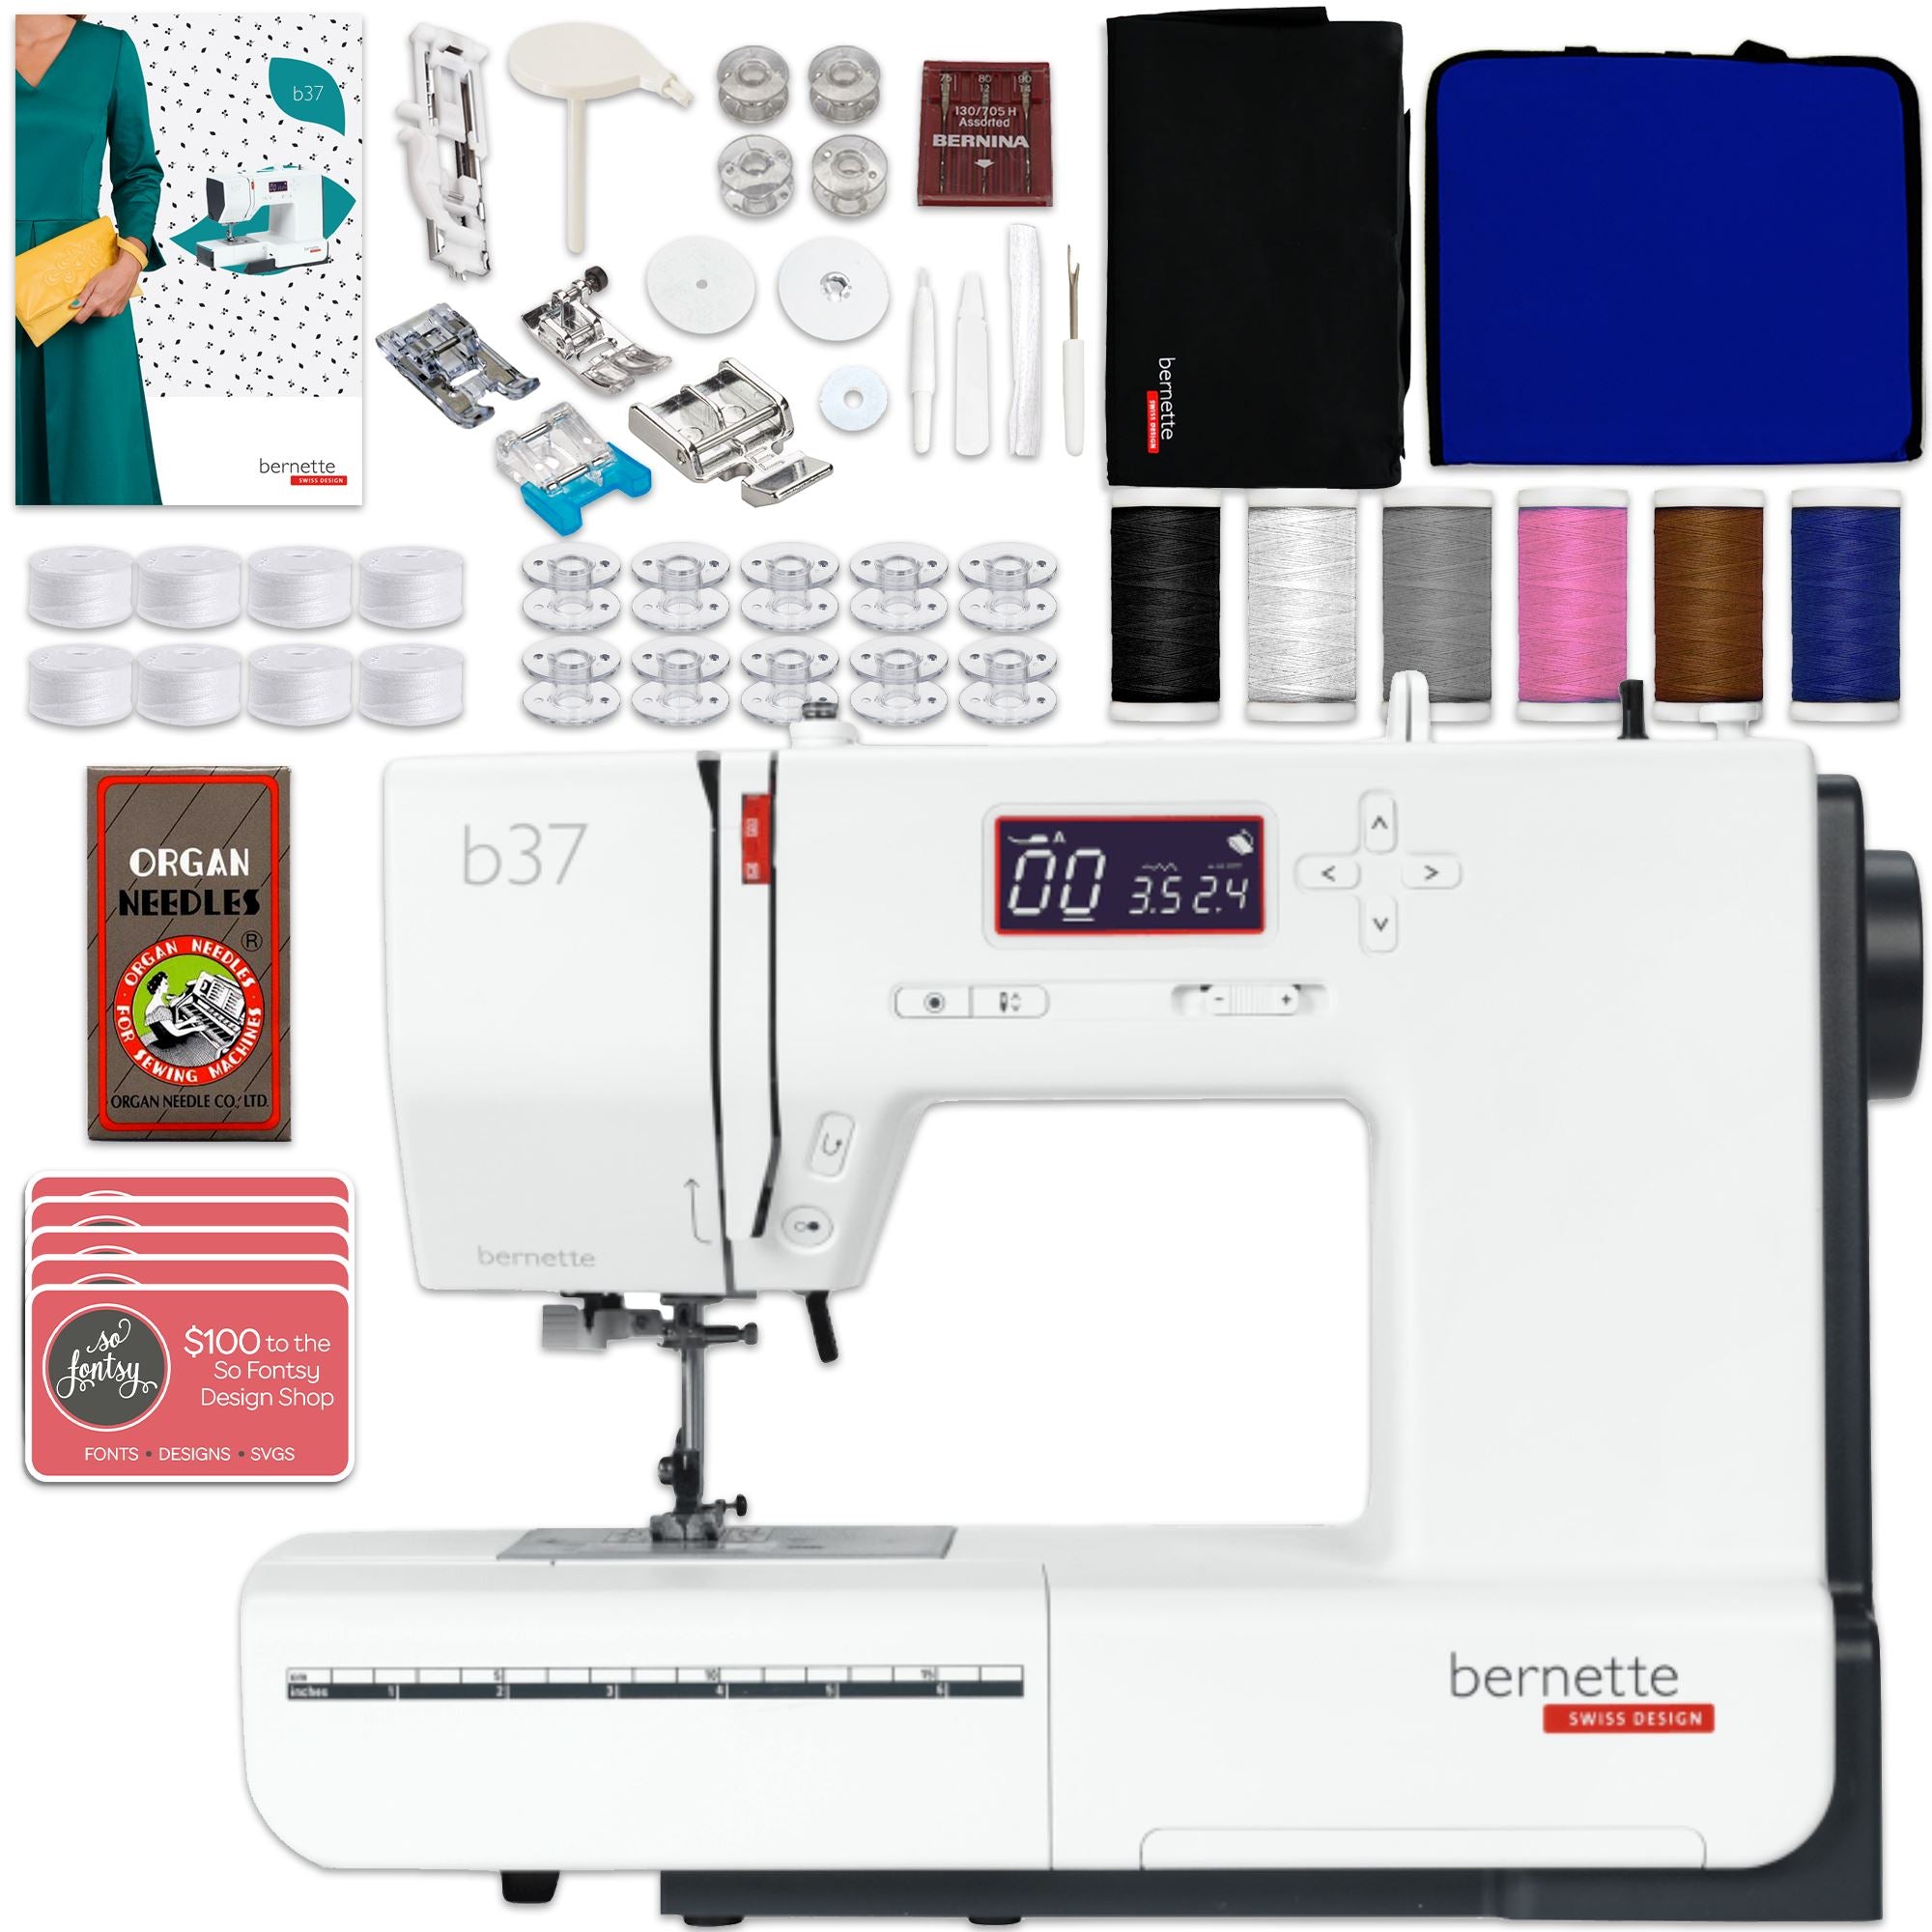 Bernette B37 Sewing Machine Bundles on | Swing Design